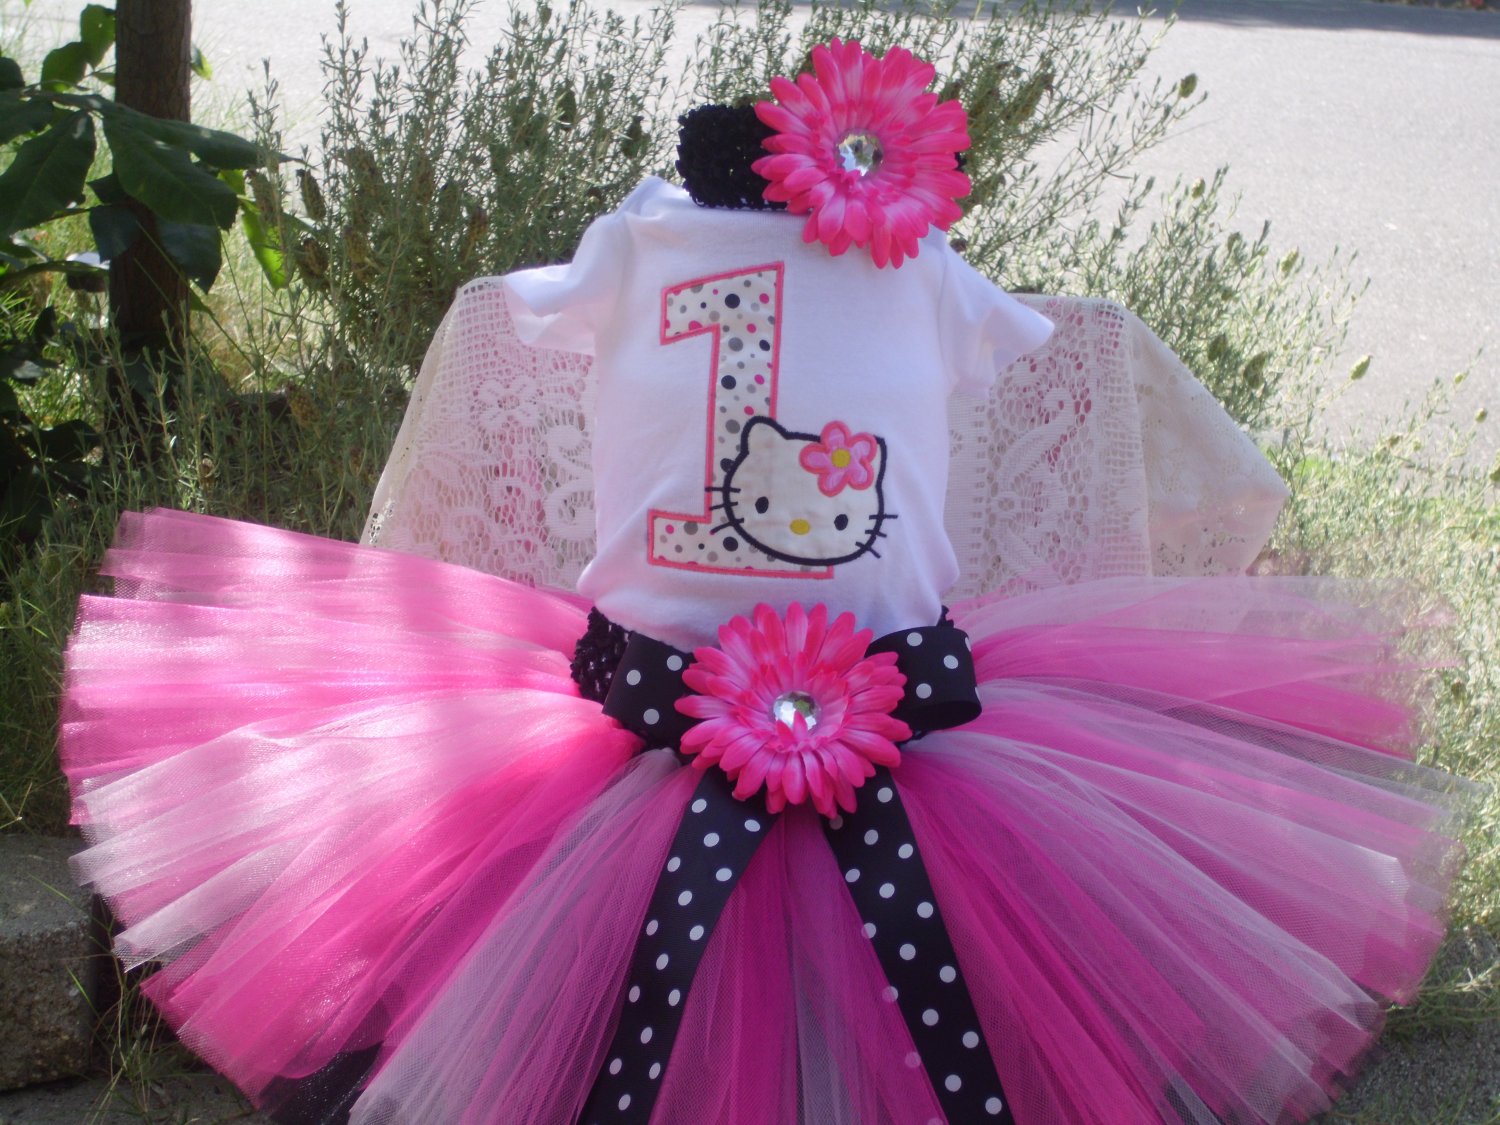 Birthday Tutu Set - Hello Kitty embroidered shirt and tutu outfit